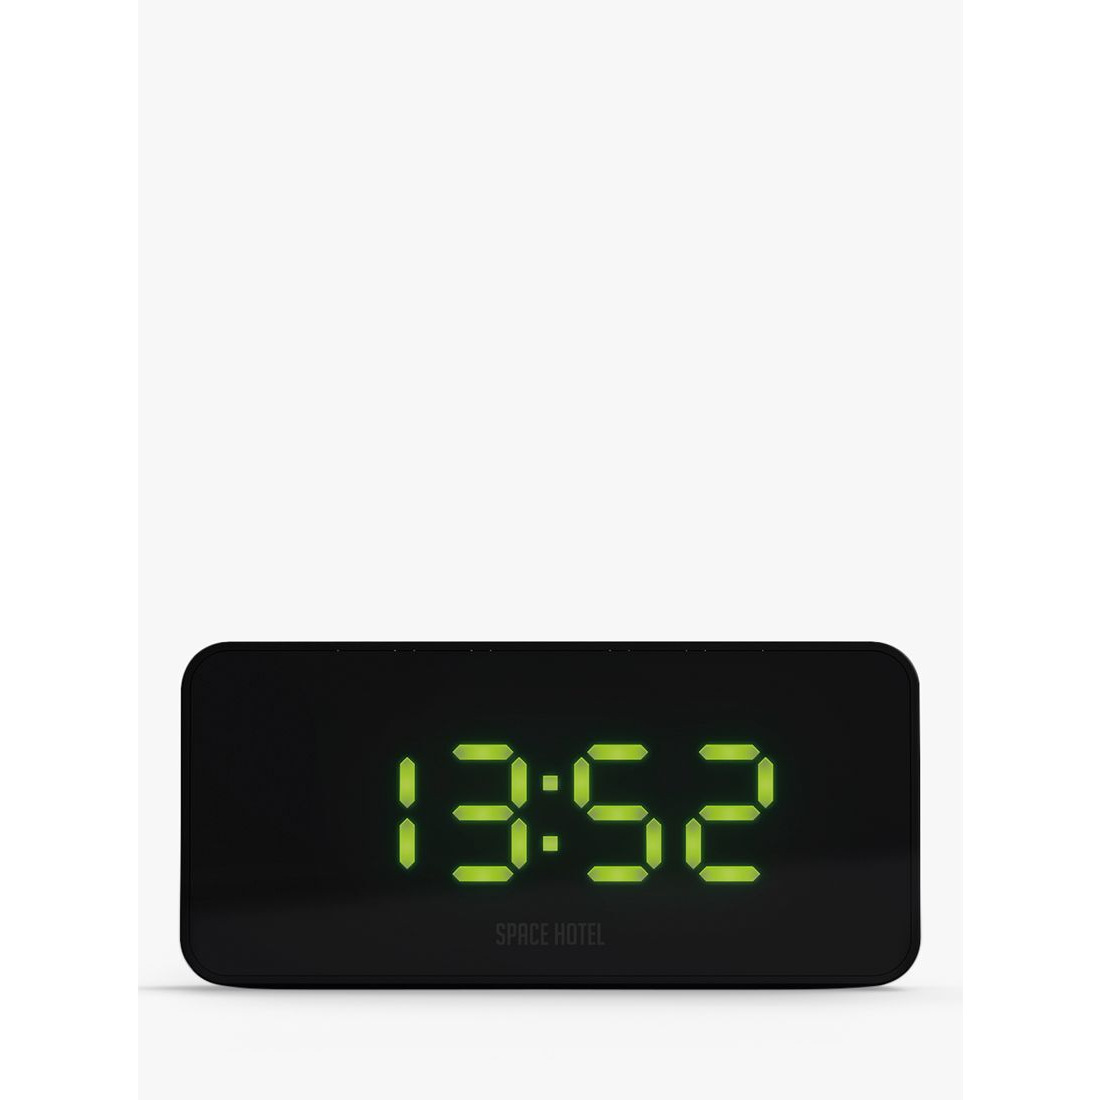 Space Hotel Hypertron LED Digital Alarm Clock, Black - image 1